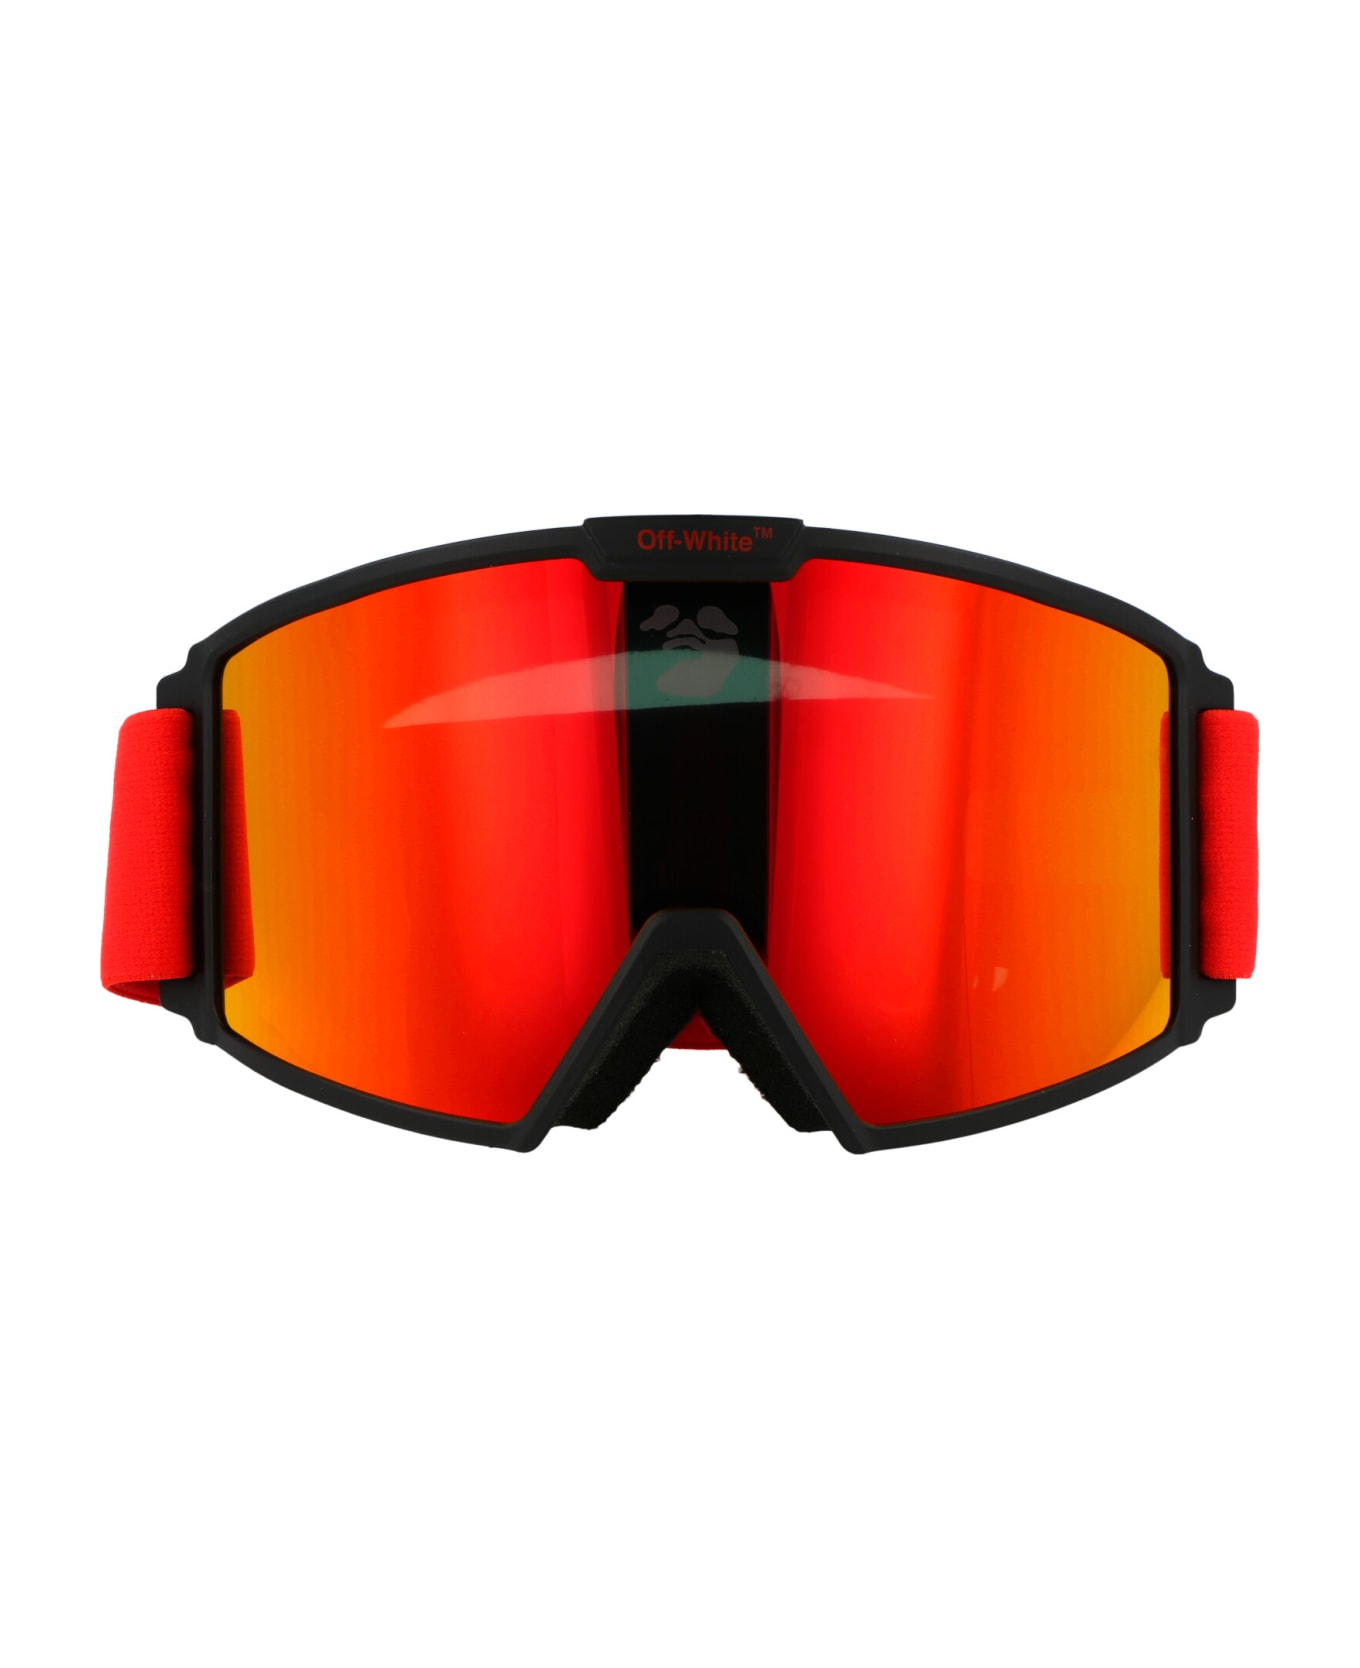 Off-White Ski Goggle Sunglasses item - 2525 RED